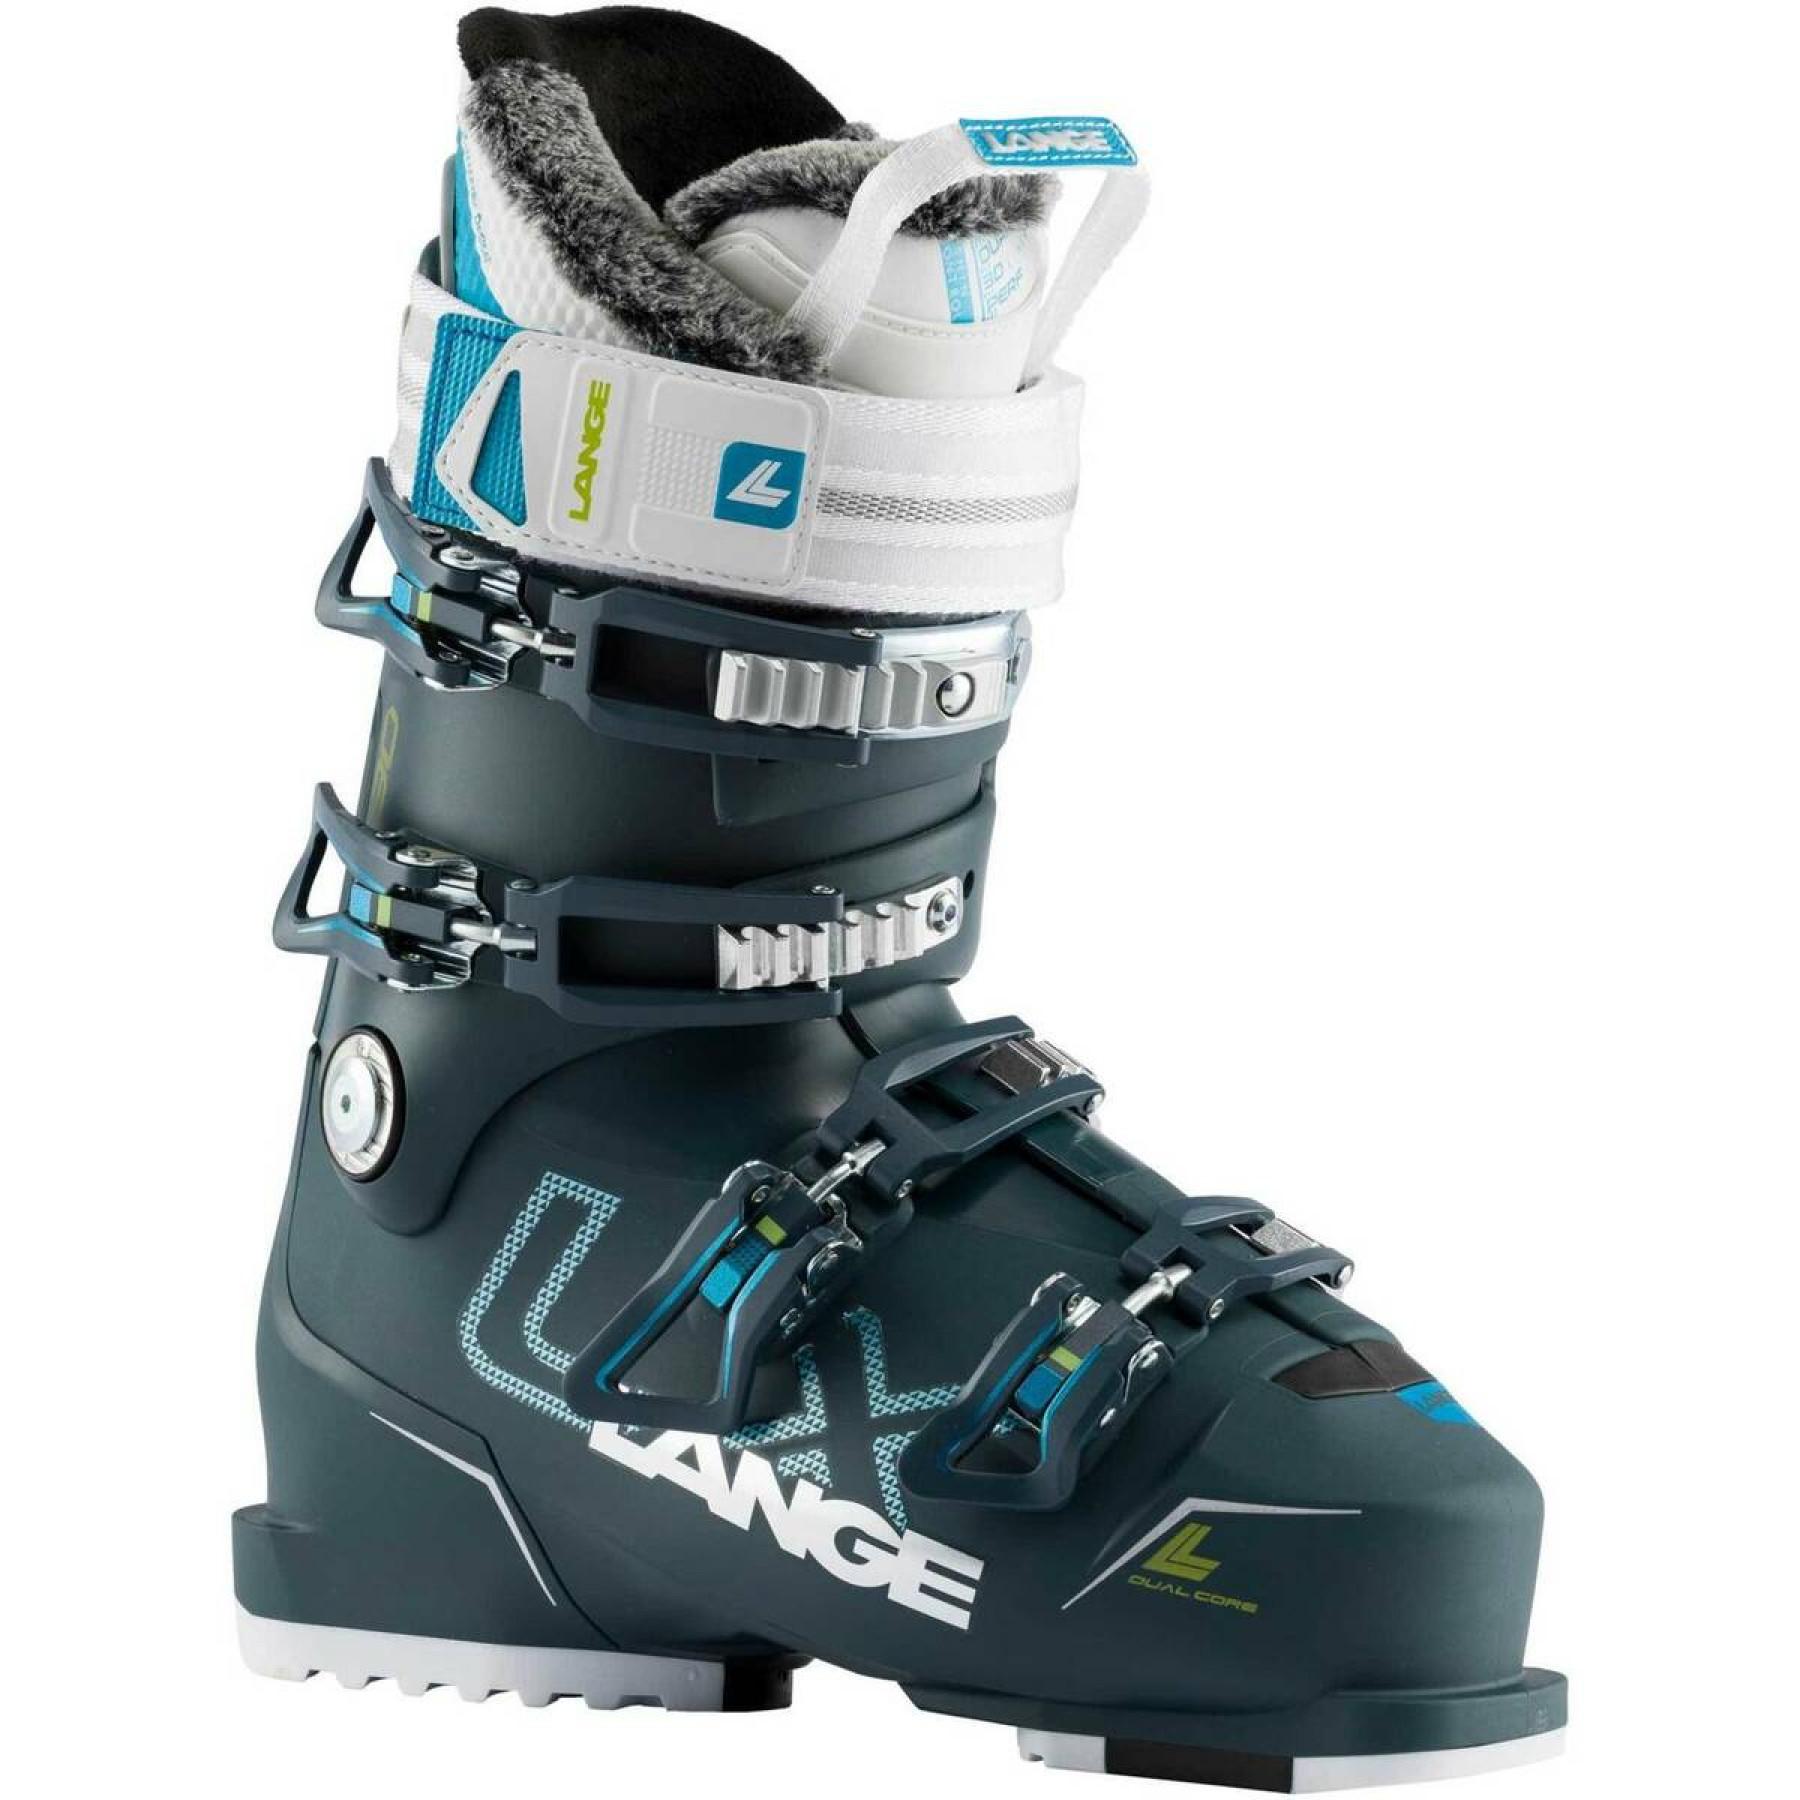 Chaussures de ski femme Lange lx 90